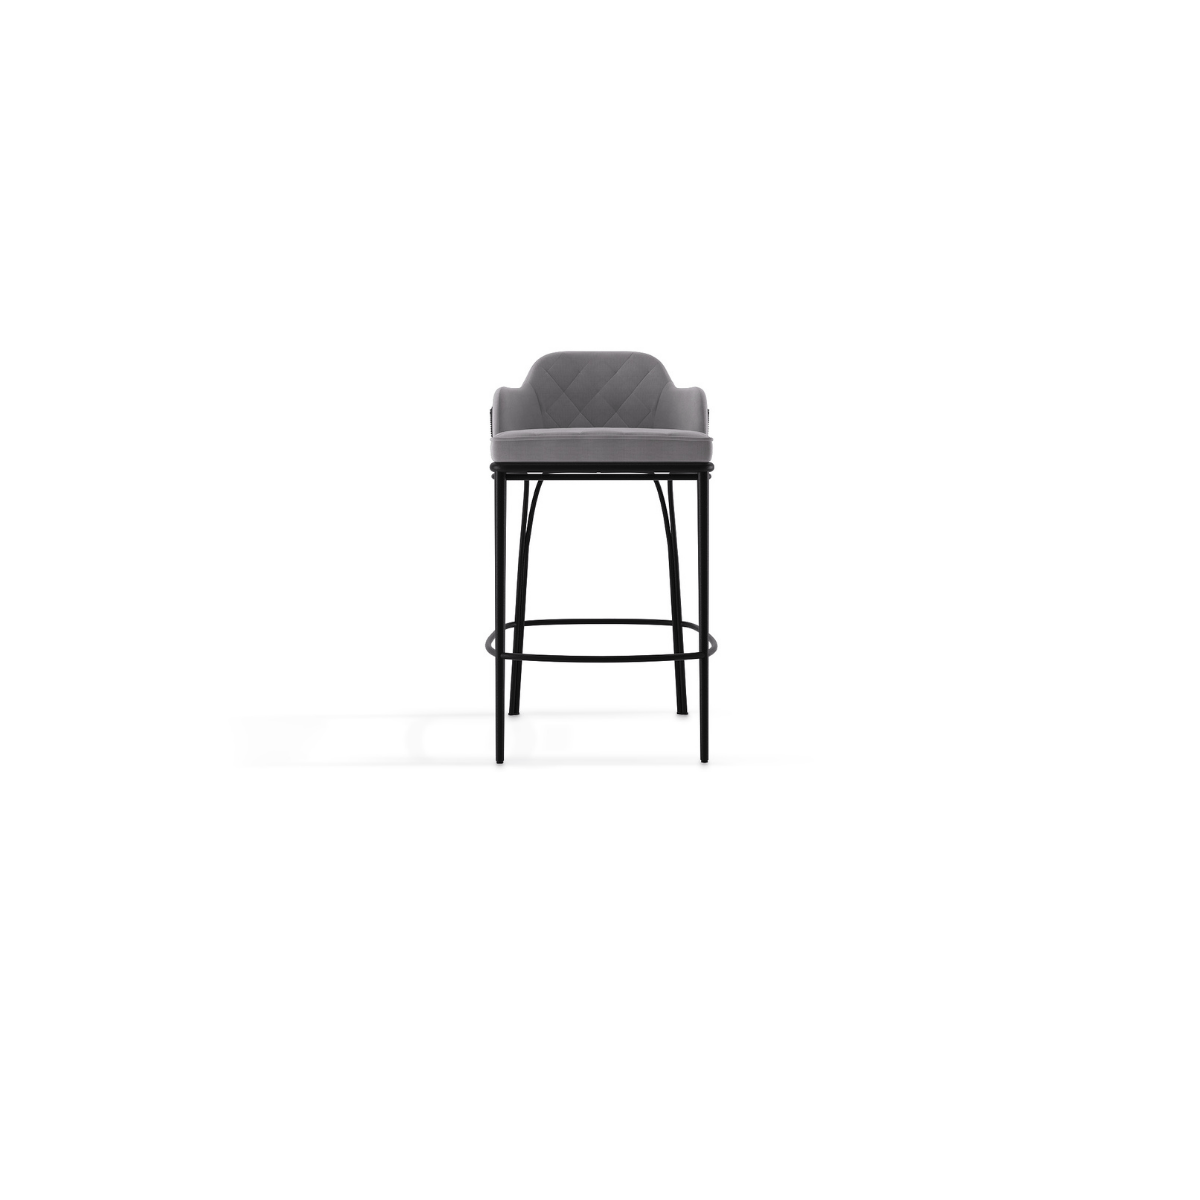 luxxu outdoor charla grey bar chair 01 Bourbon II Swivel Counter Stool